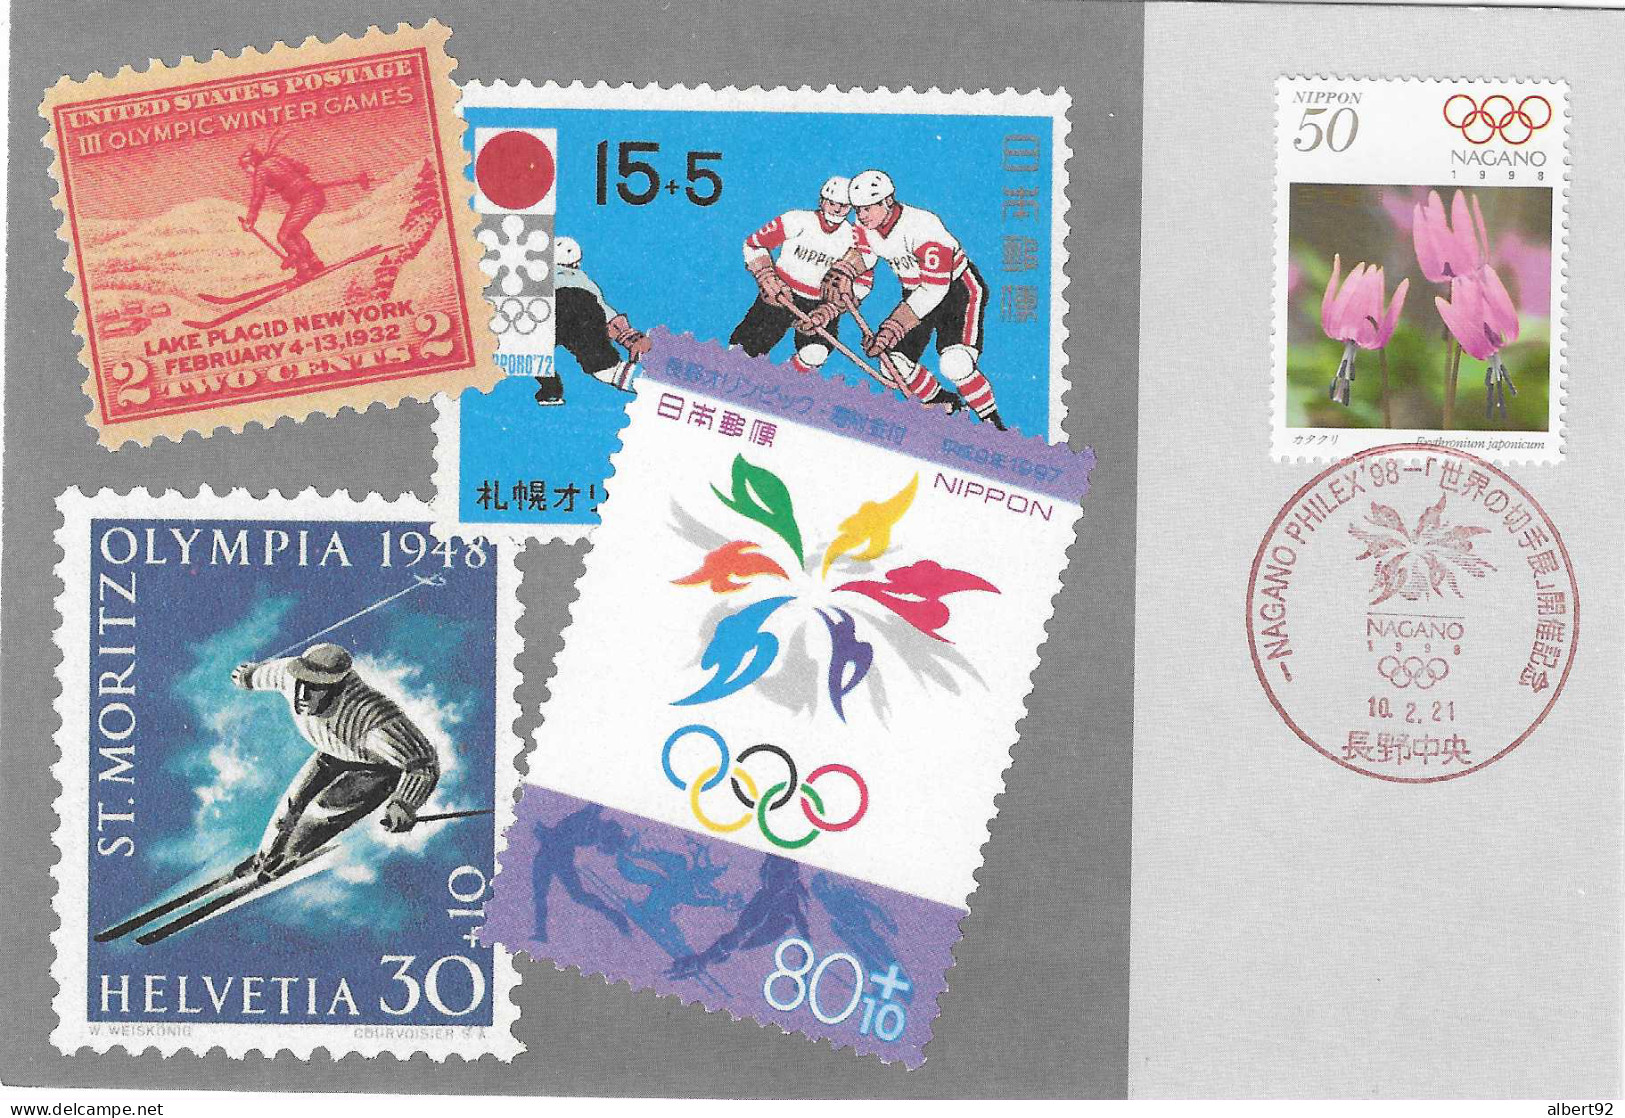 1998 Jeux Olympiques D'Hiver De Nagano: Exposition Olympique Nagano Philex 98 - Winter 1998: Nagano